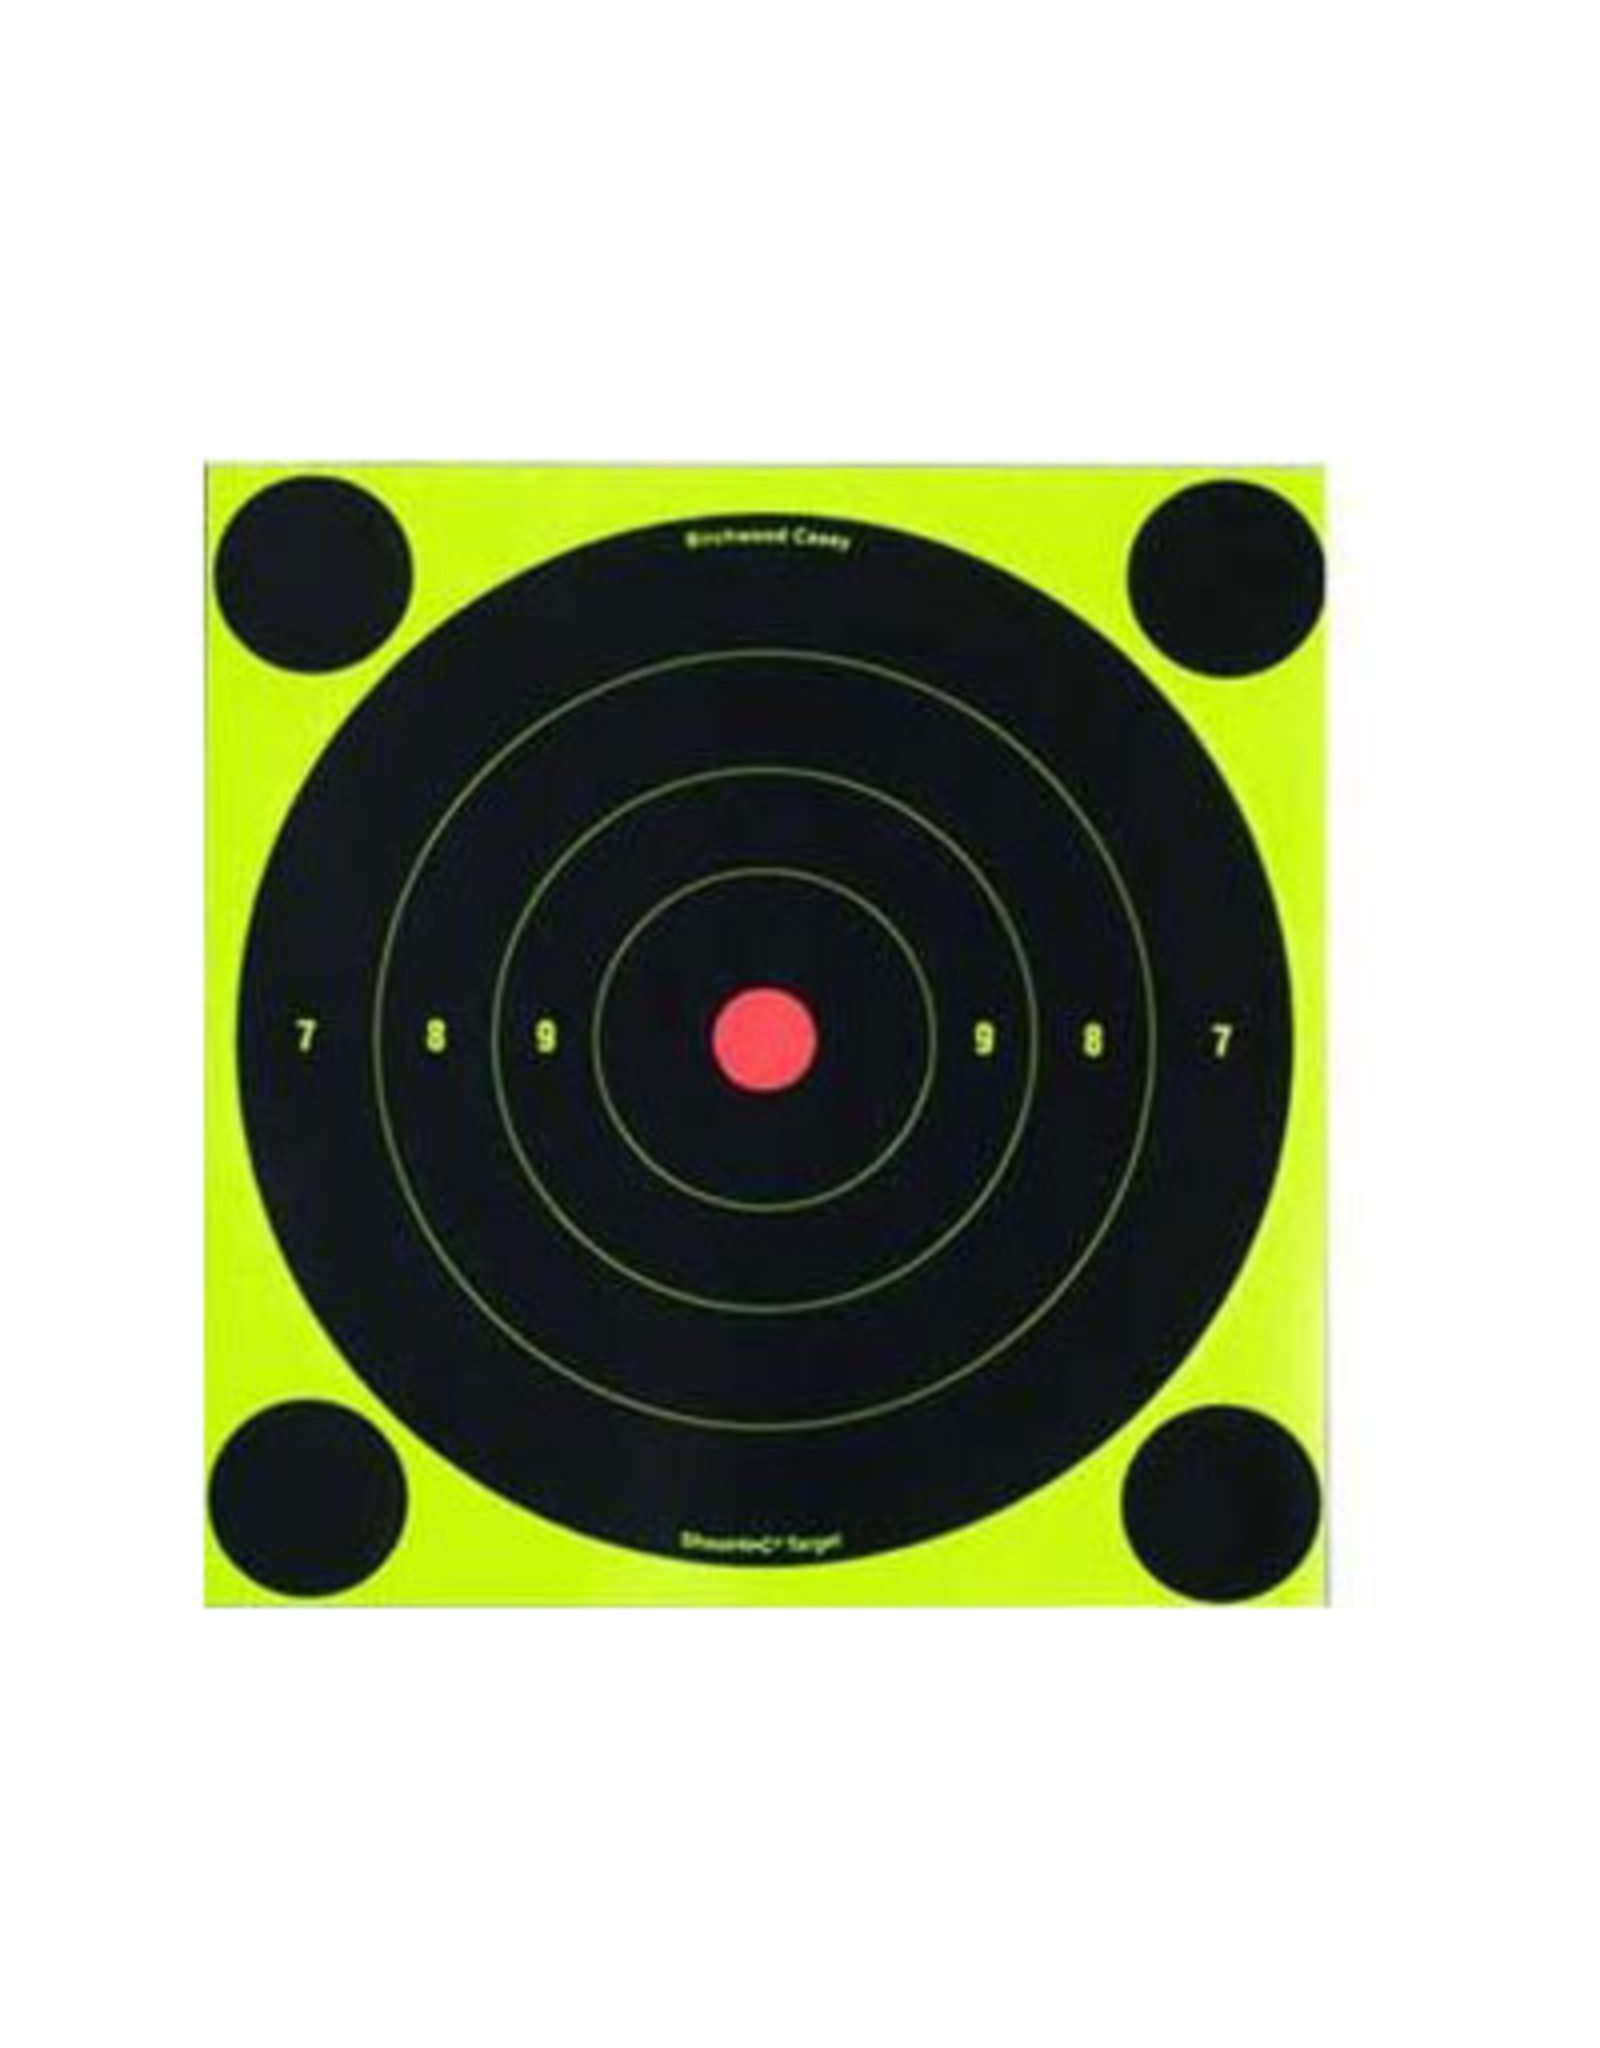 Birchwood Casey single - Birchwood Casey Shoot-N-C Targets, 8" Bullseye, 50 Targets + 200 Pasters